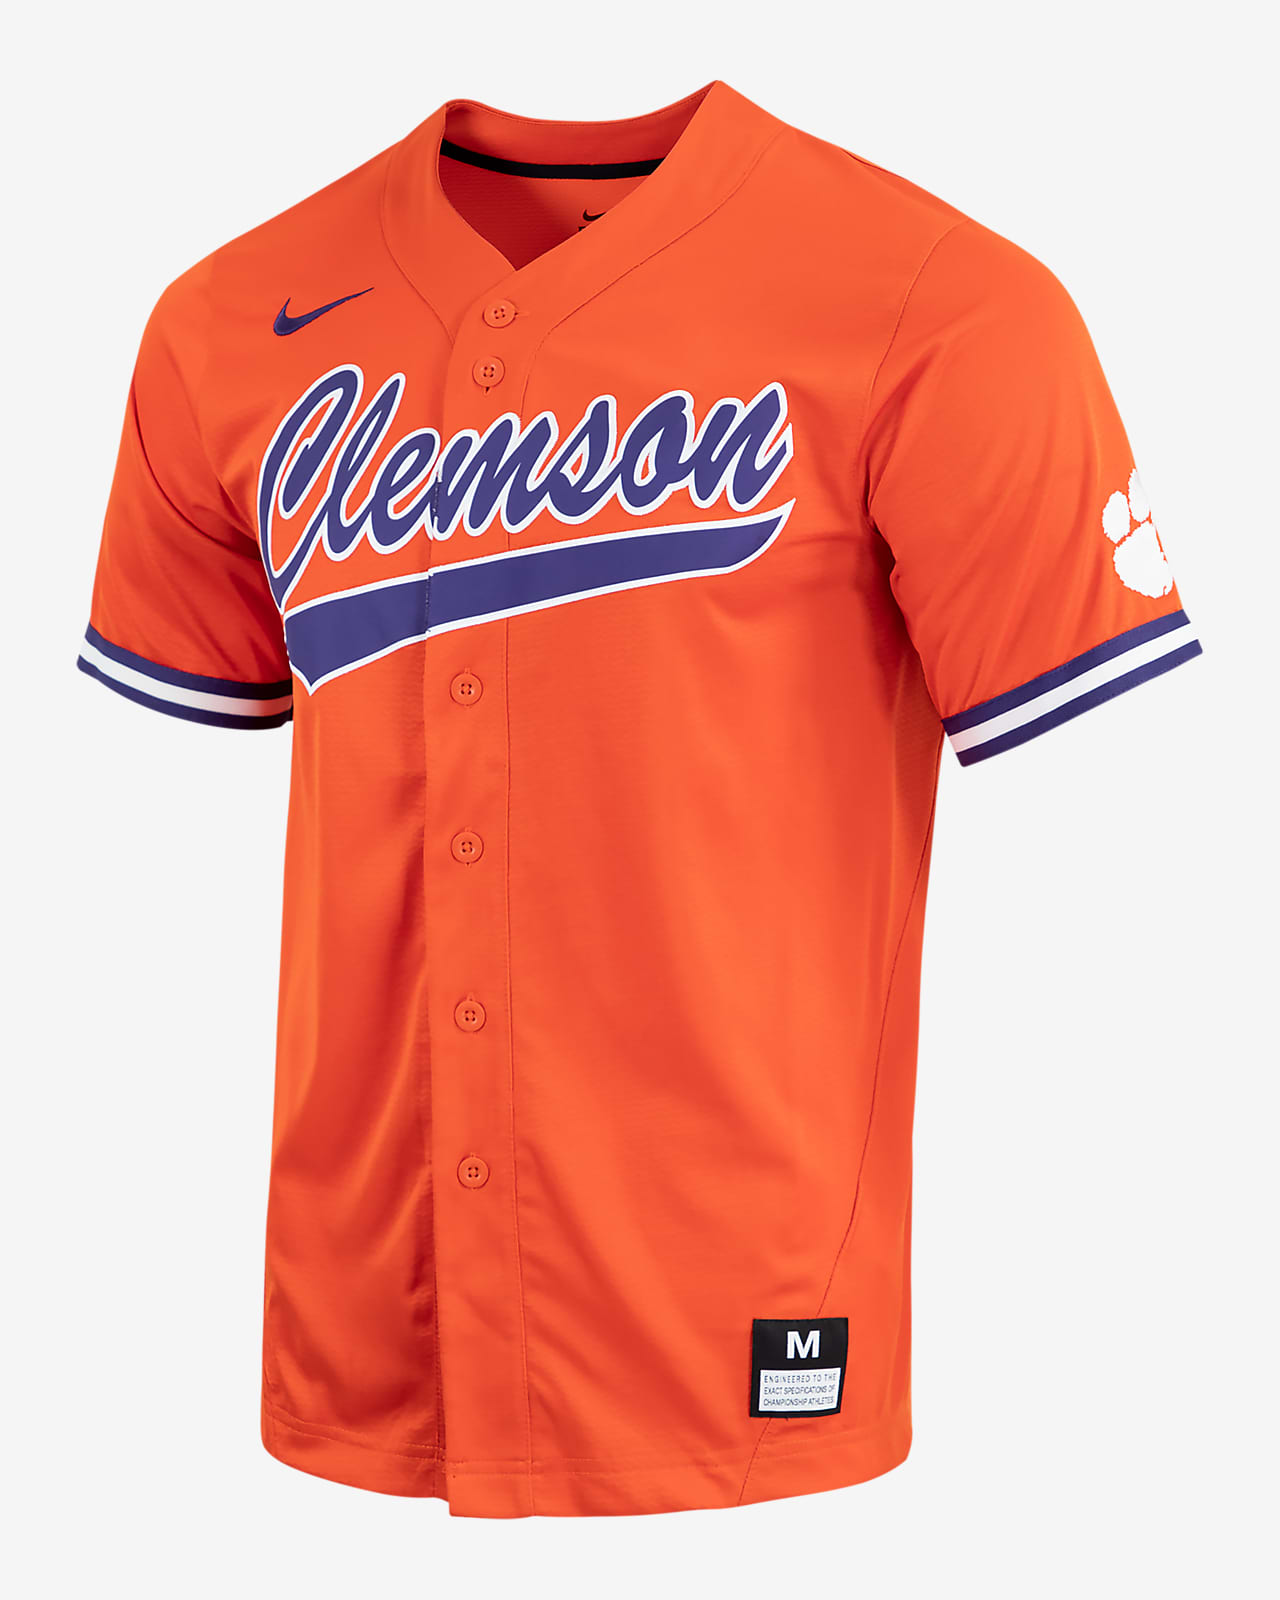 Clemson Men's Nike College Full-Button Baseball Jersey